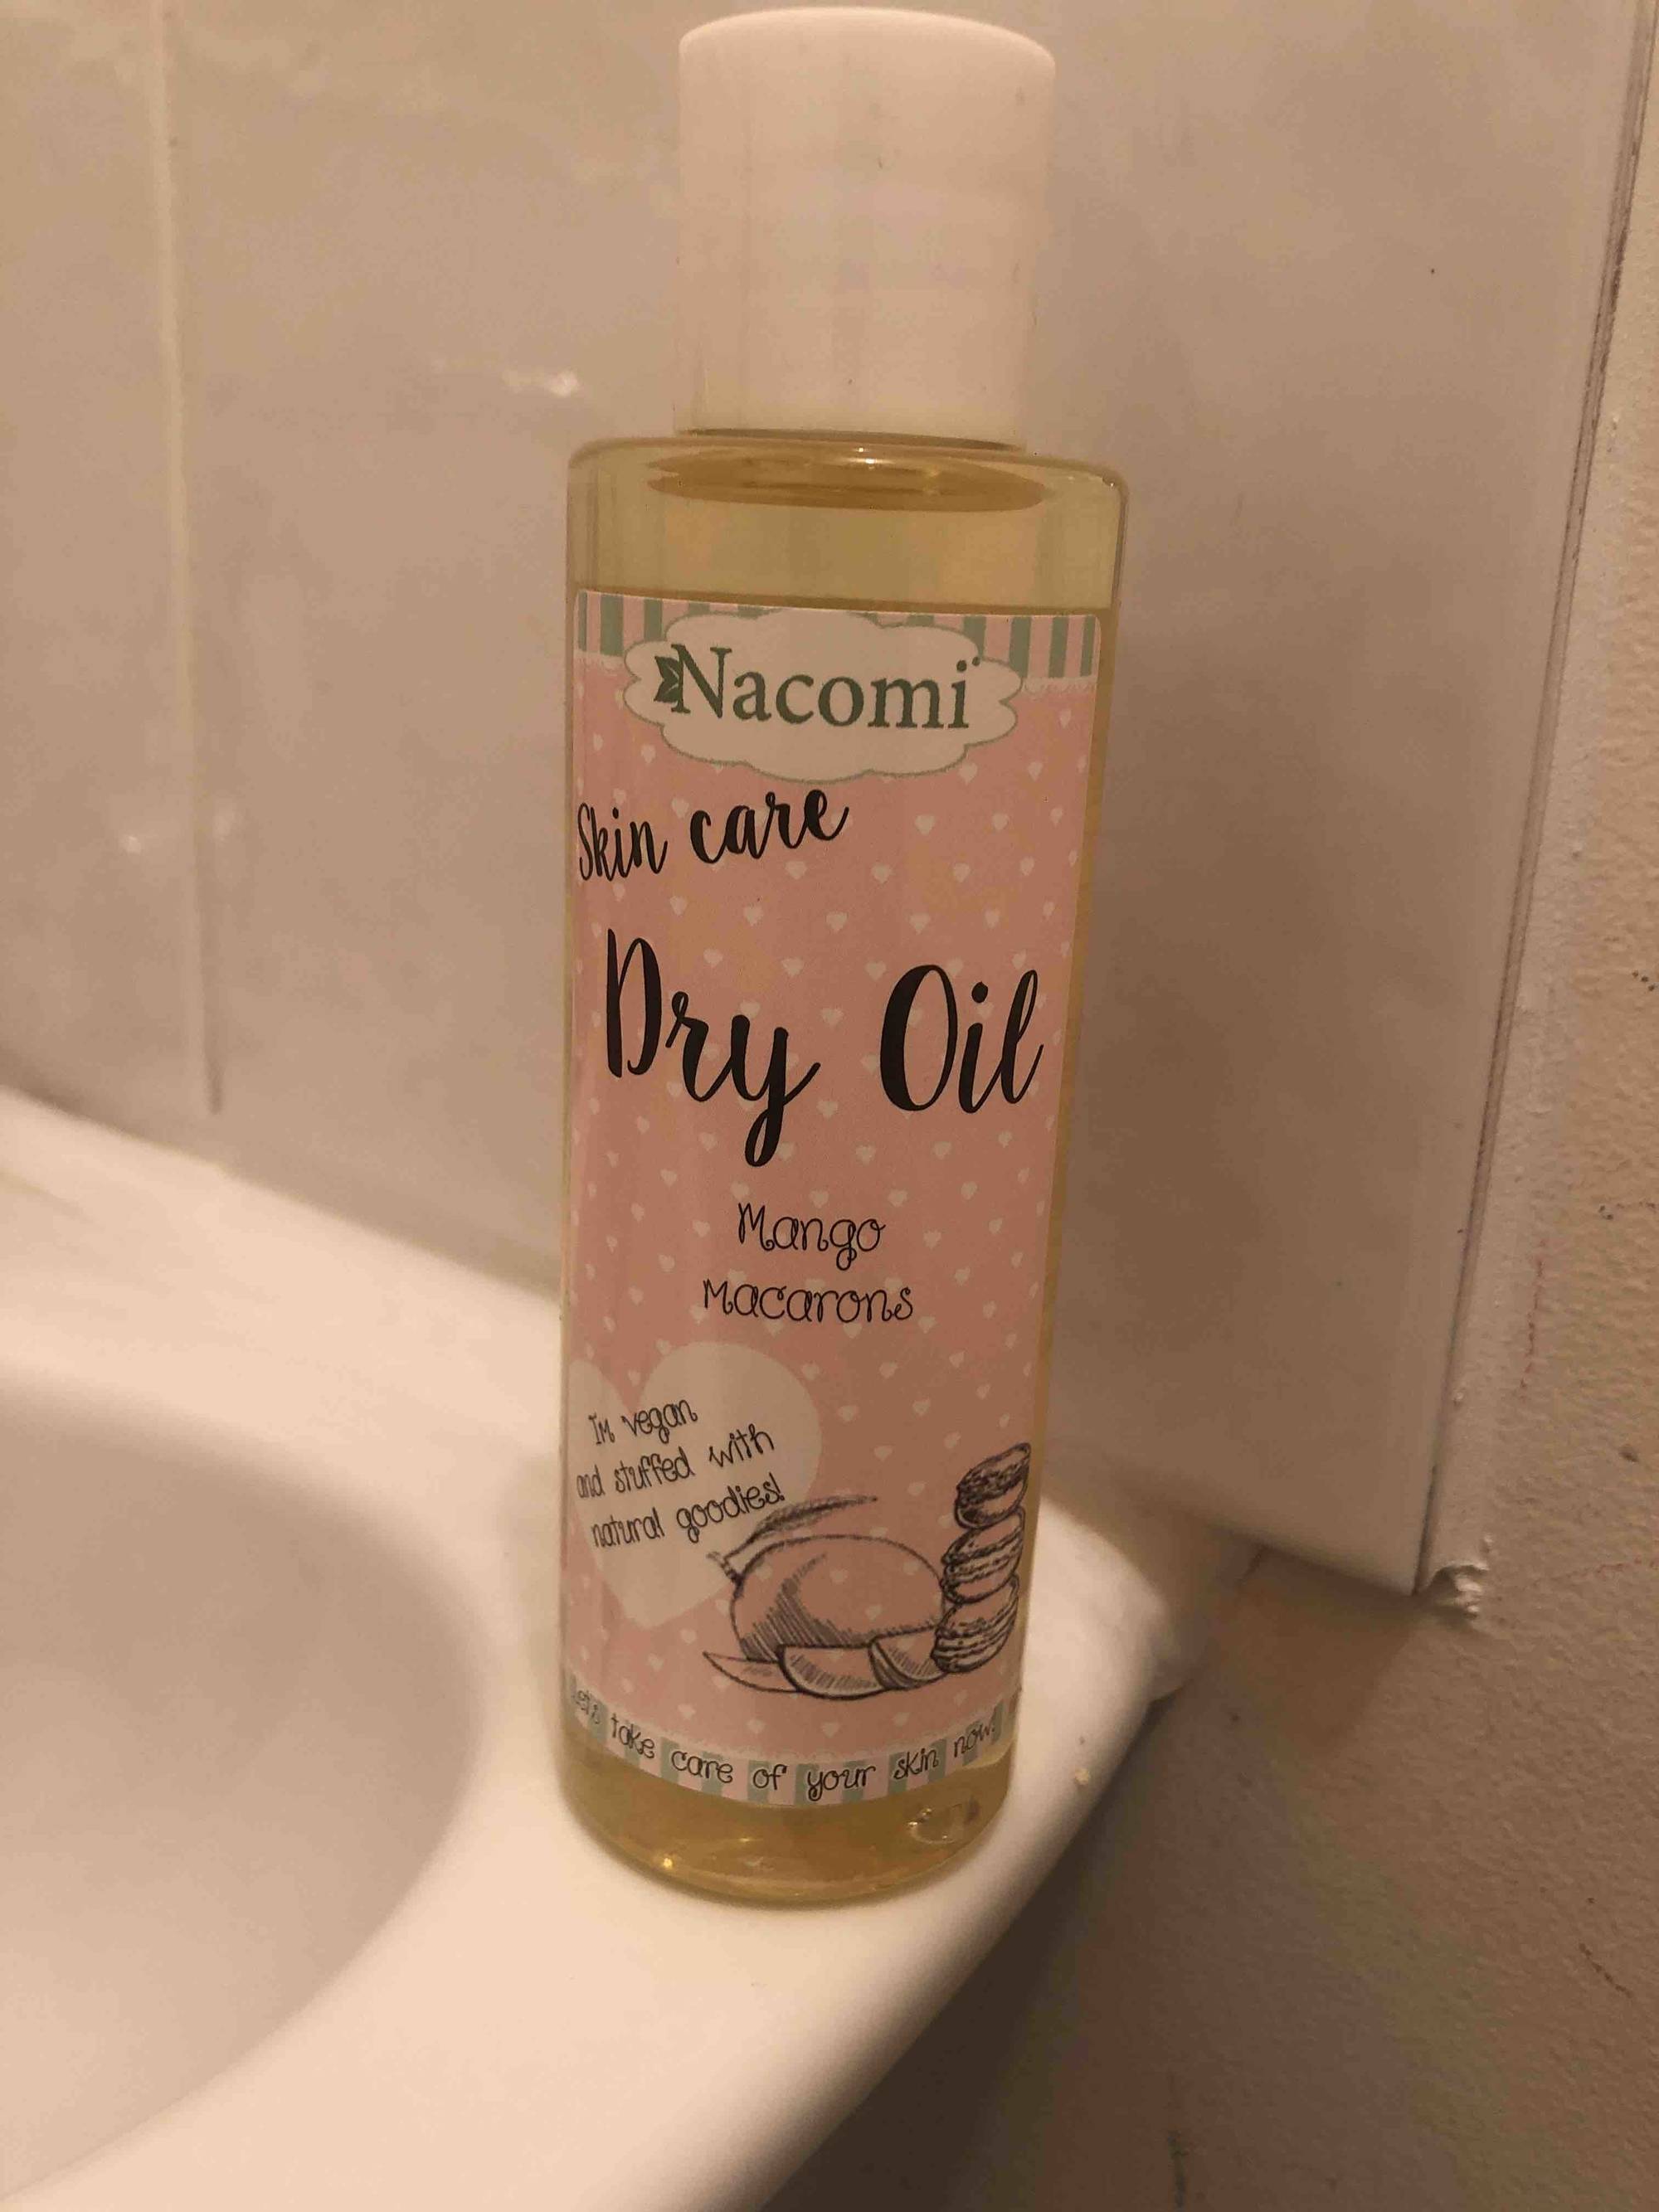 NACOMI - Skin care - Dry oil - Mango, macarons